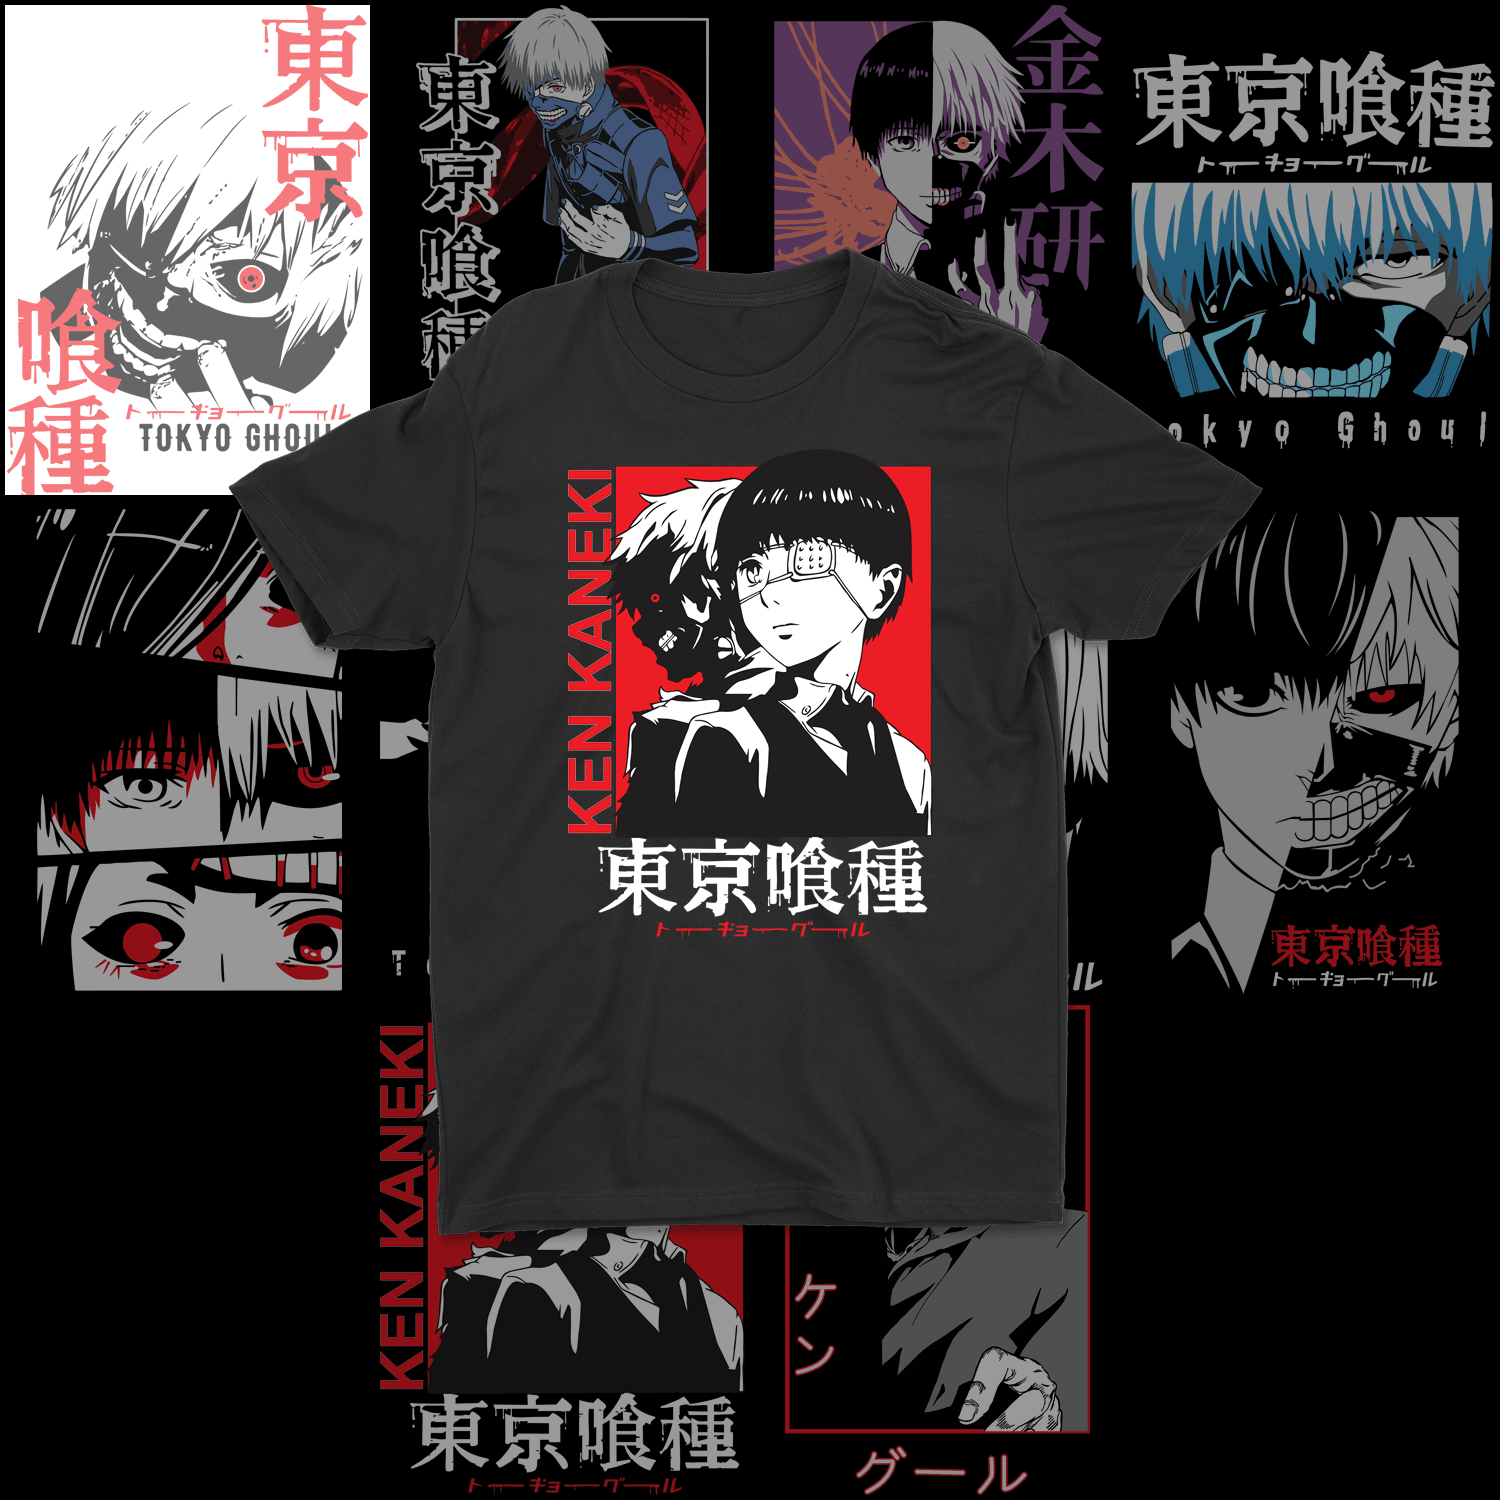 Tokyo Ghoul T-Shirt Collection - TopTierPrintLab